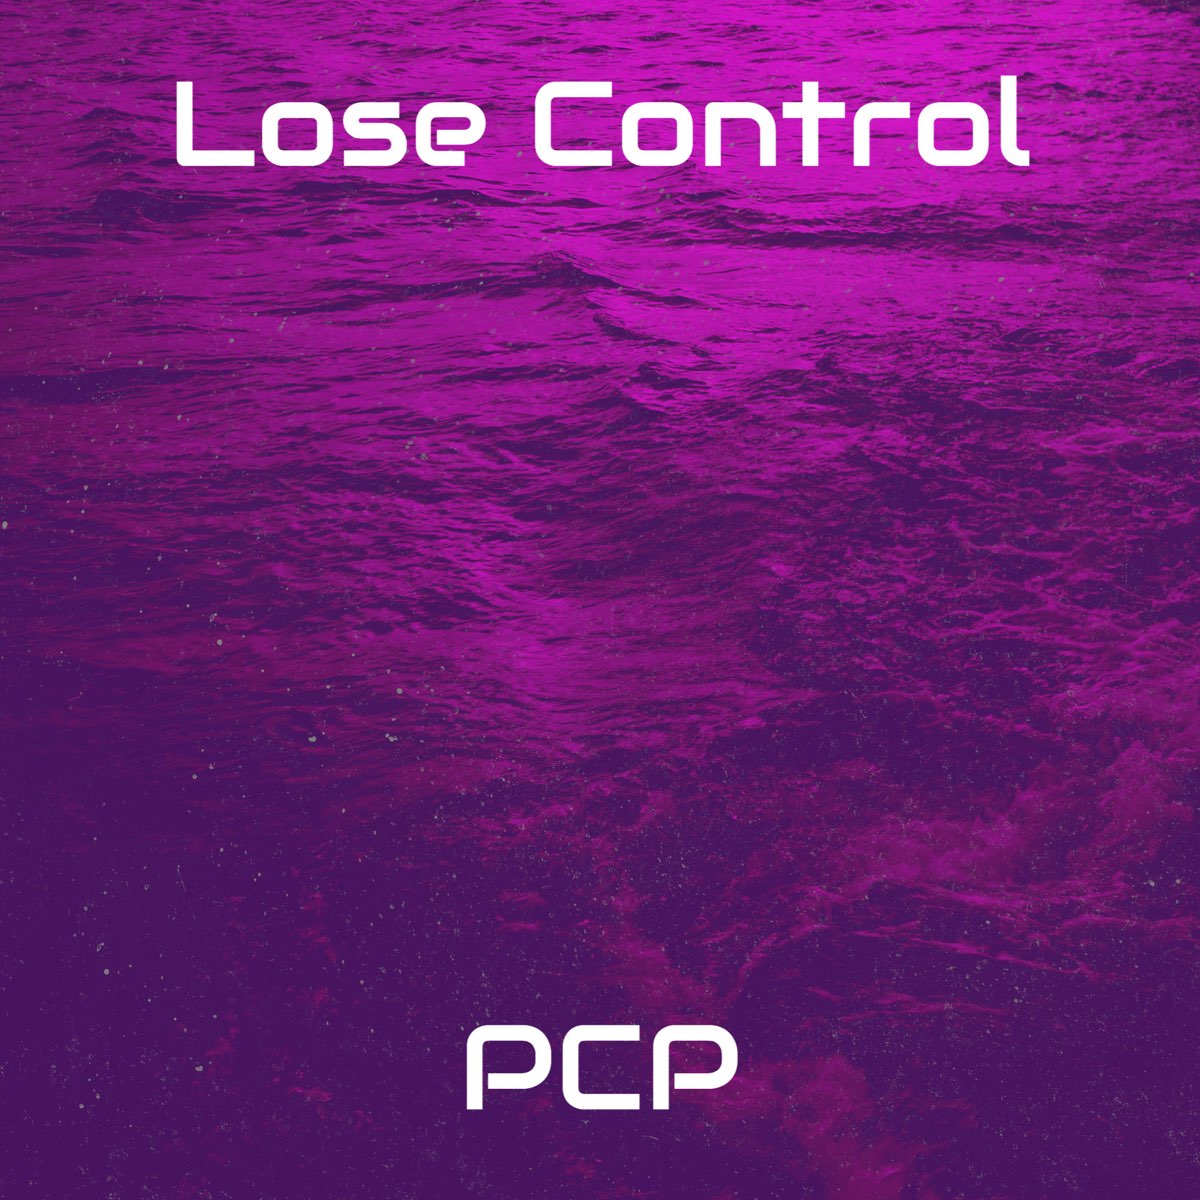 Lose Control. Lose Control песня. I lose Control песня. Обложка альбома lose Control. Включи lose control